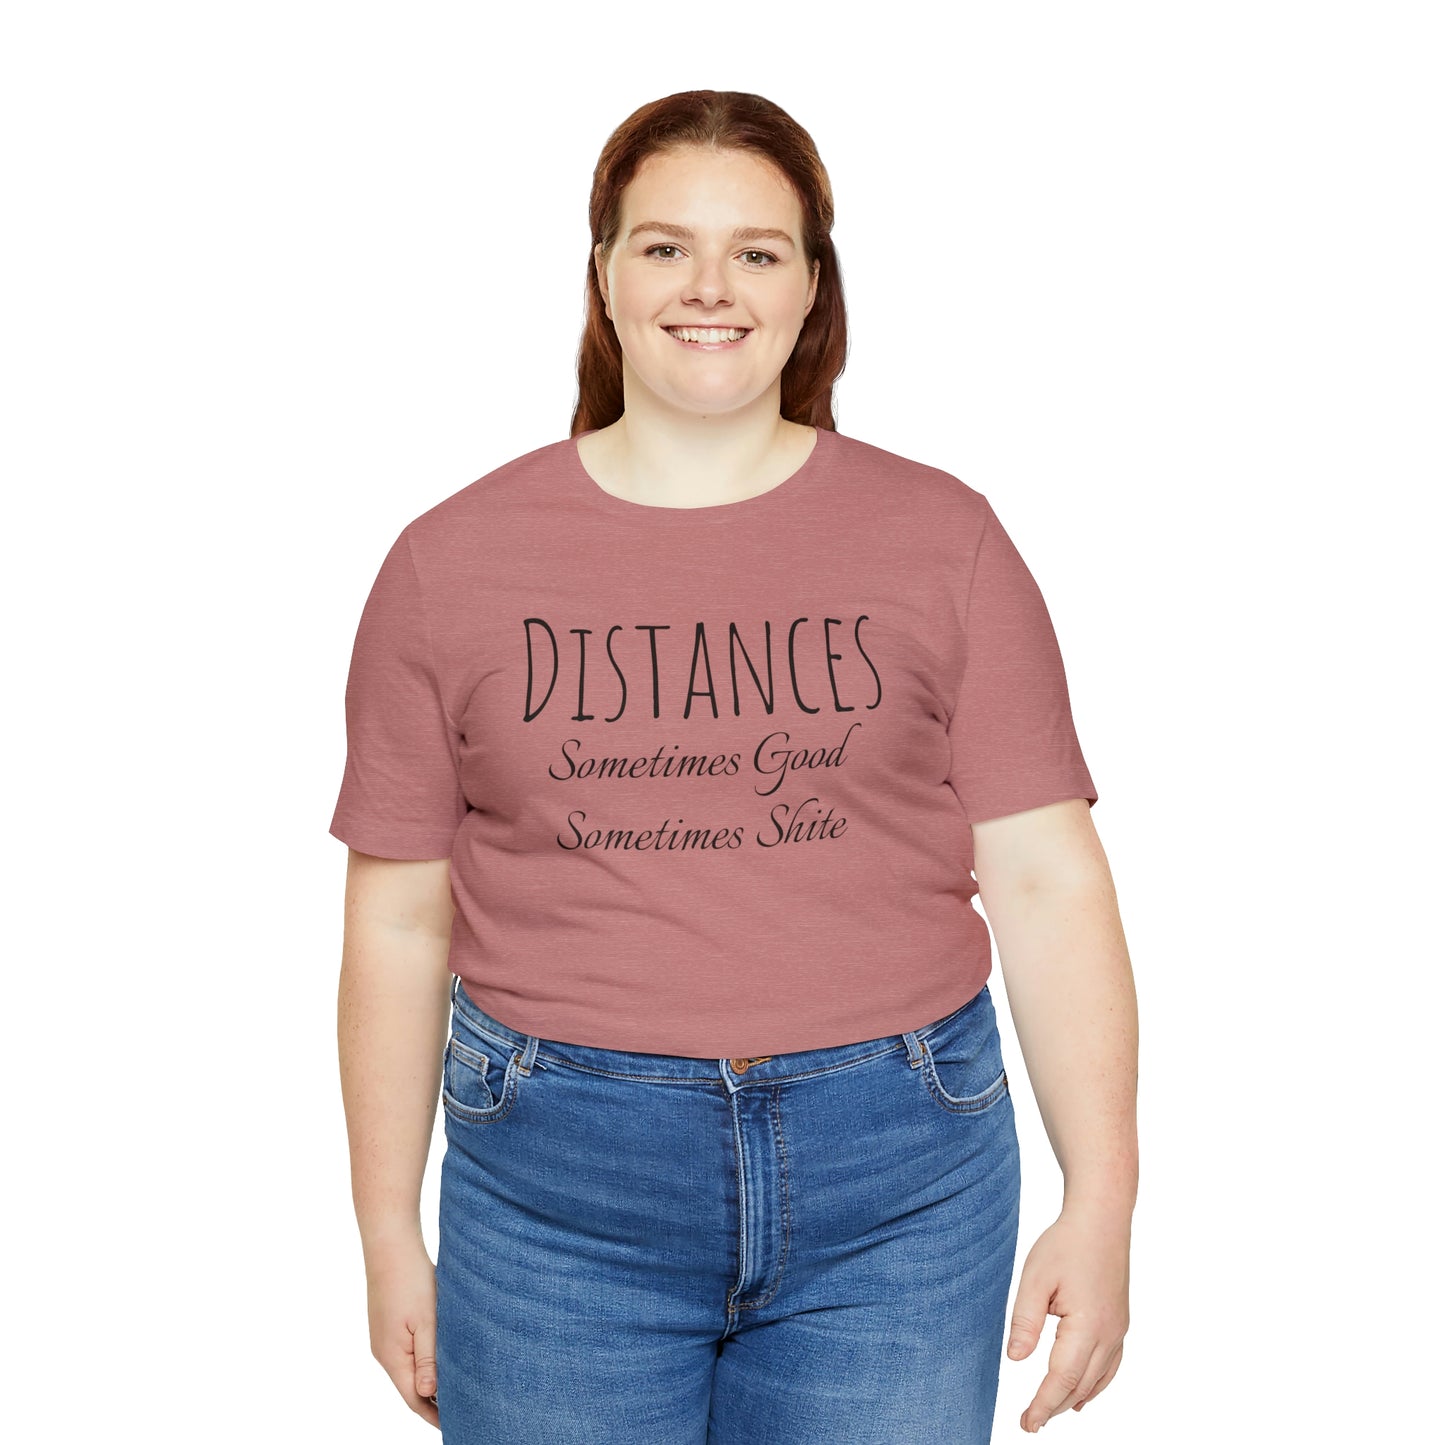 Shirt - Distances - Sometimes Good, Sometimes Shite